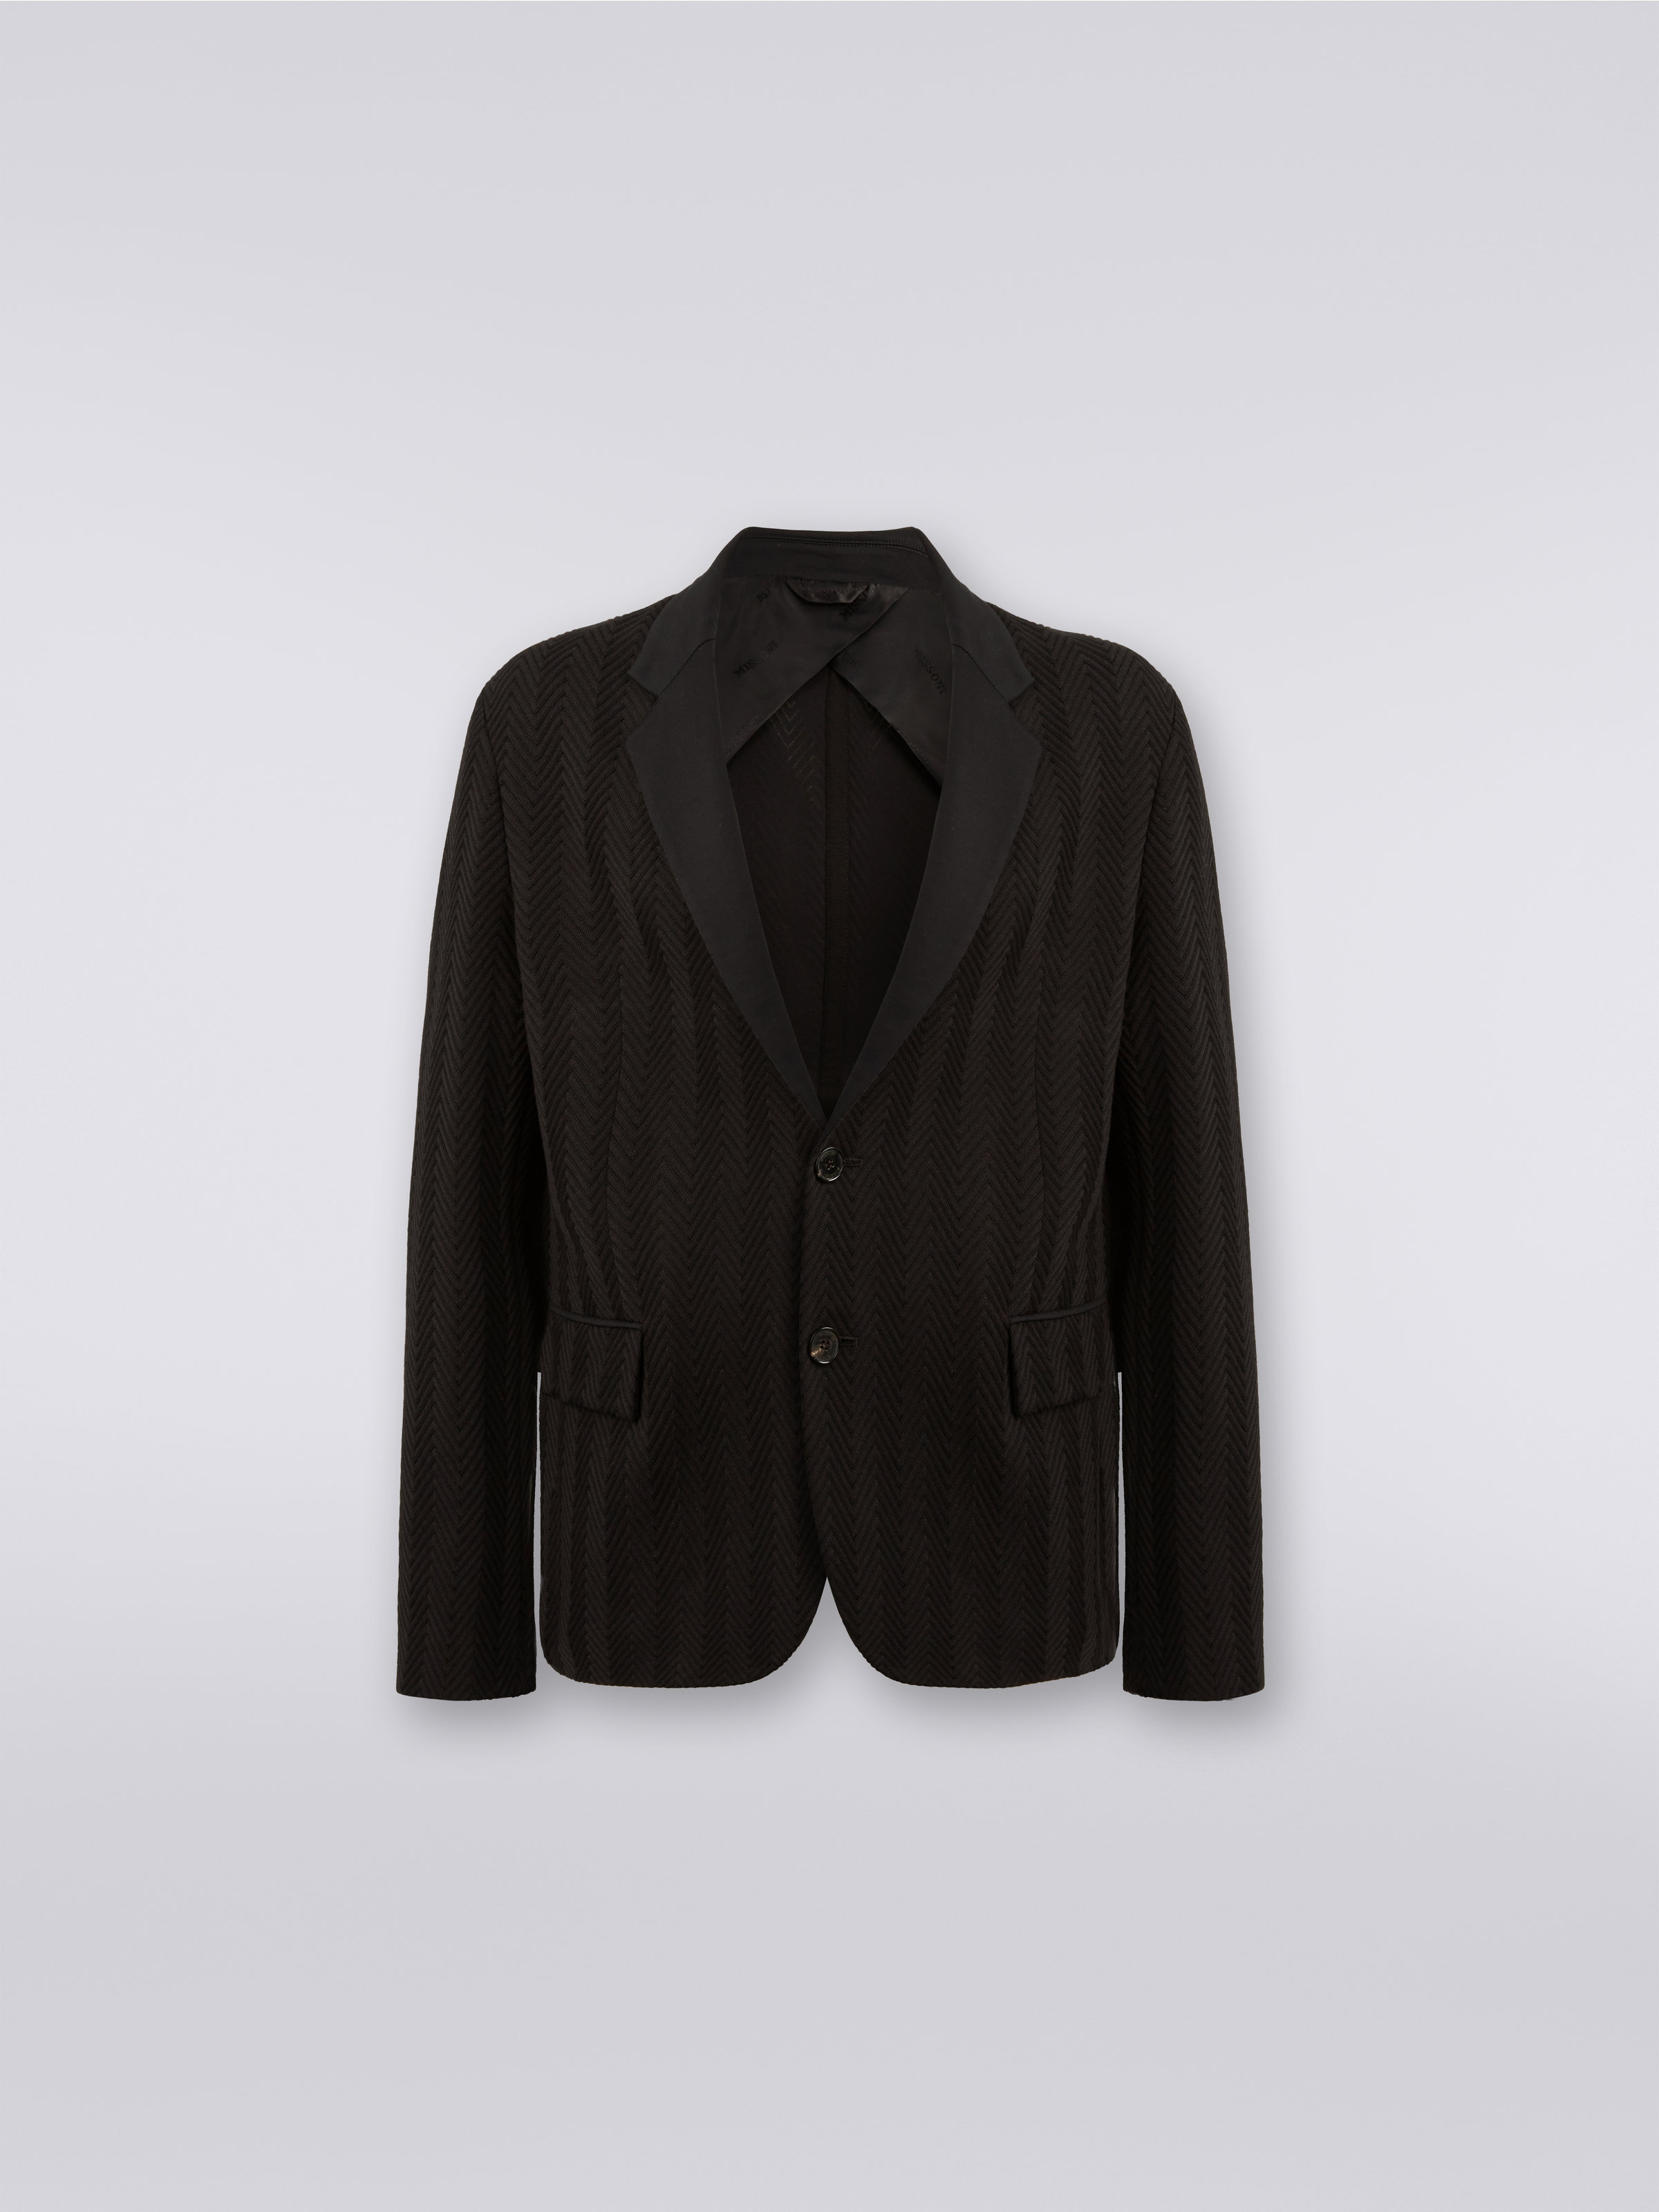 Cotton and viscose chevron jacket, Black    - 0